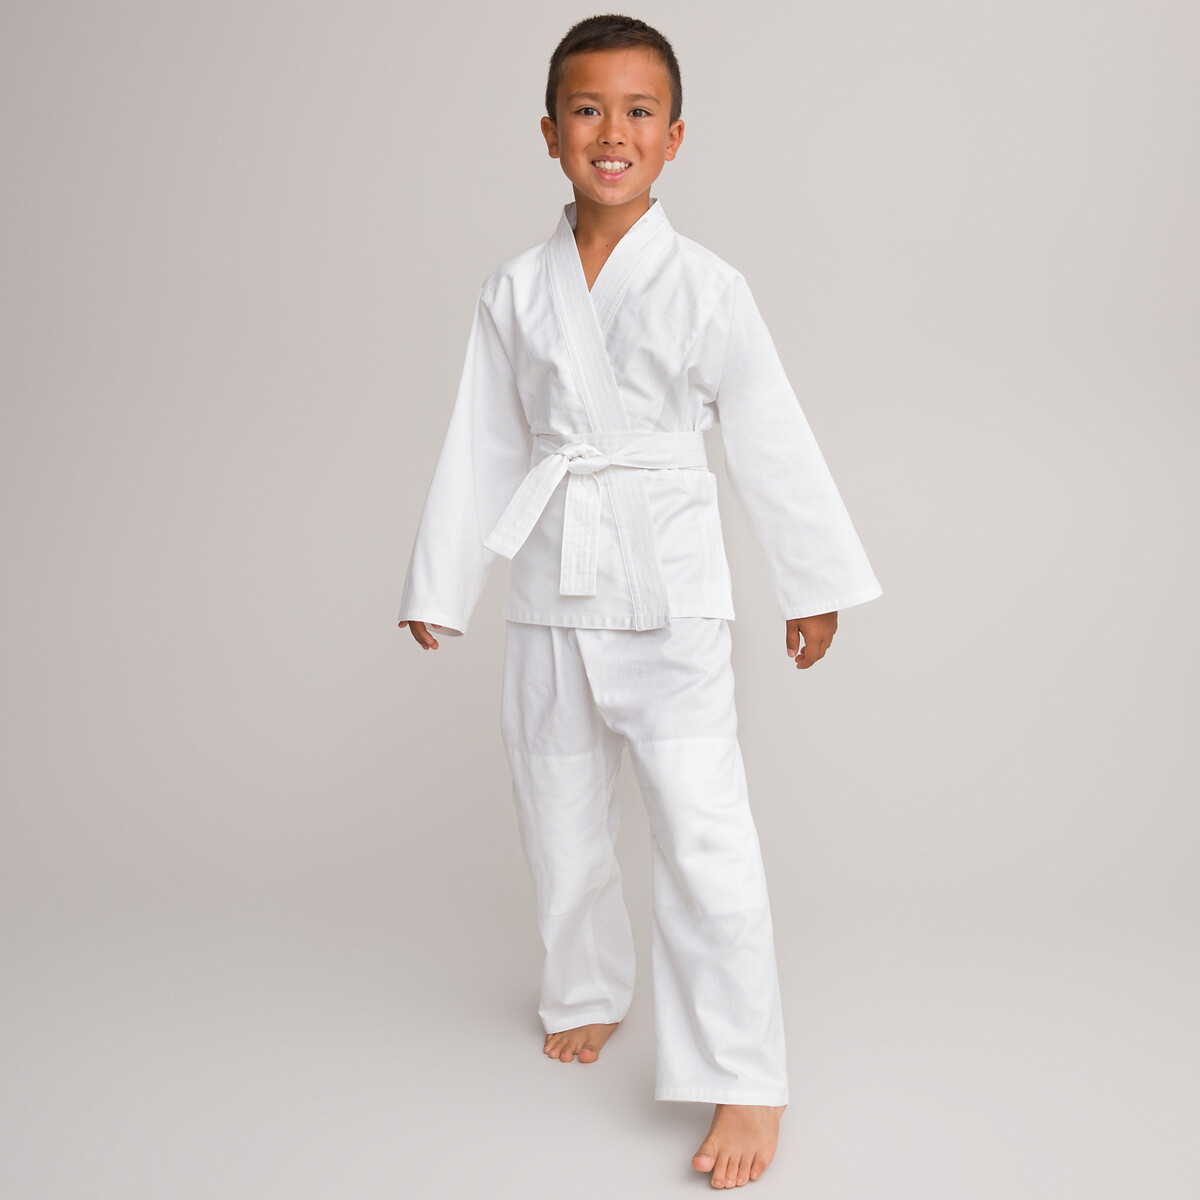 Kimono - Karategi Karate Premium per bambini con cintura bianca